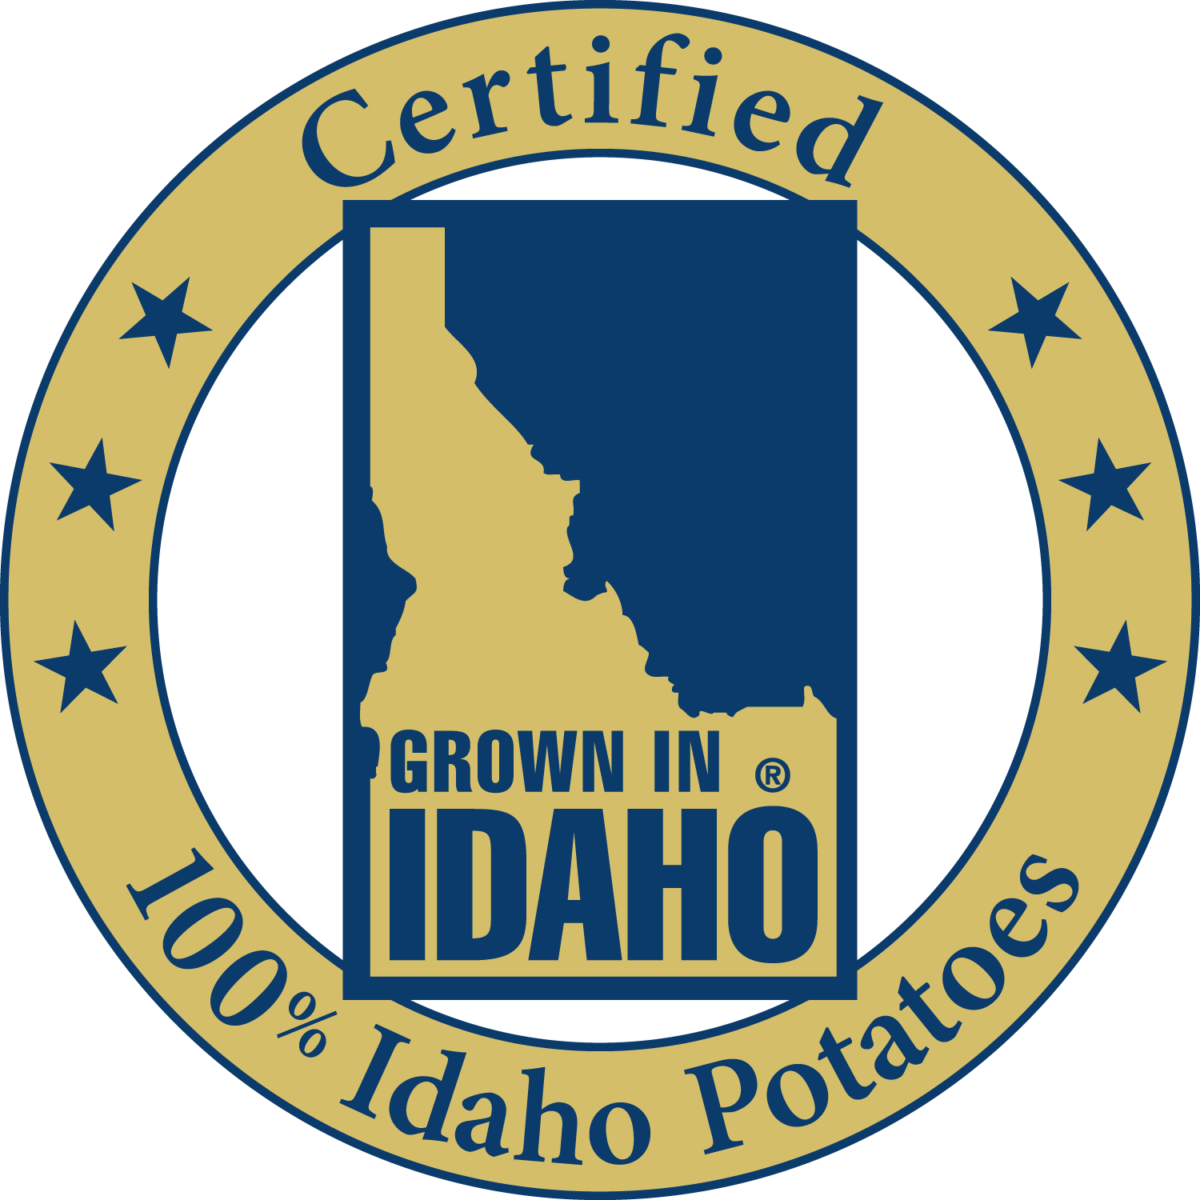 Idaho potato commission logo.